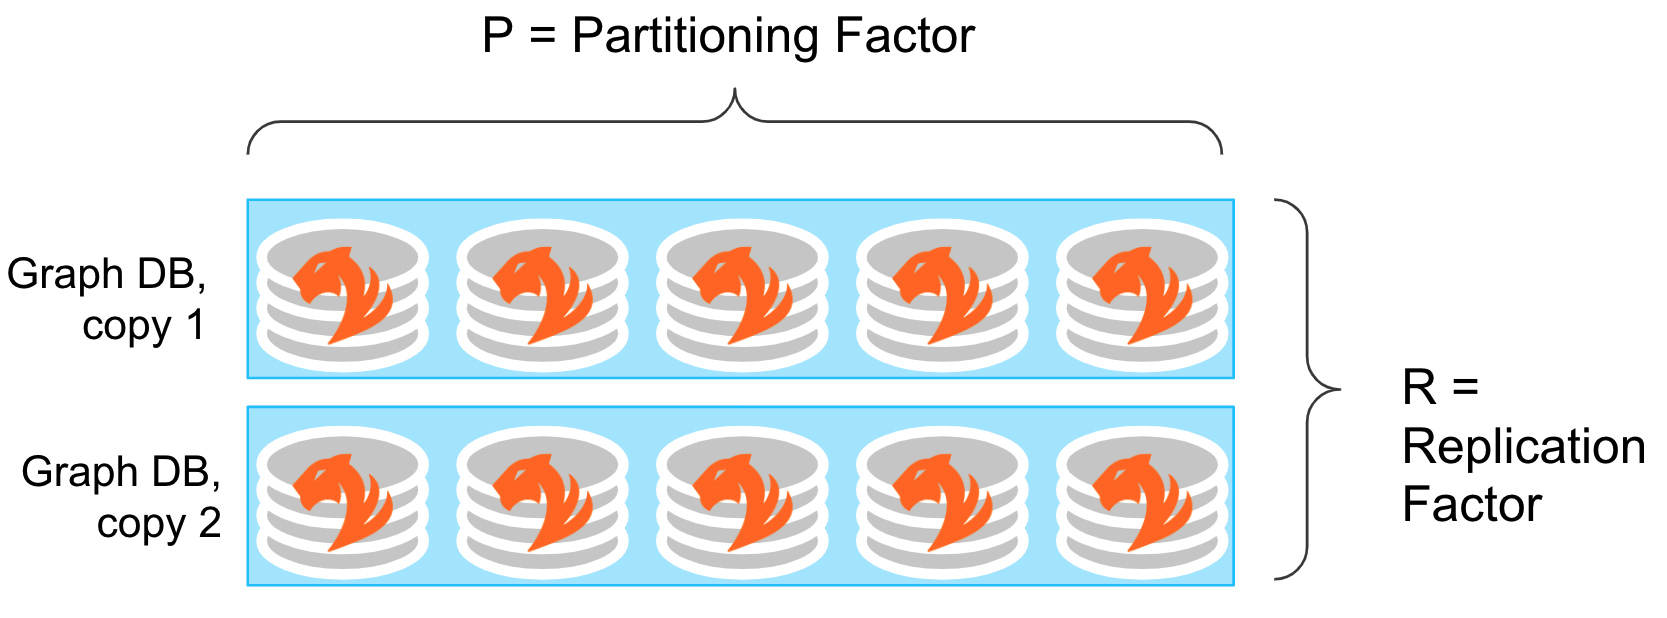 Replication factor vs. partitioning factor